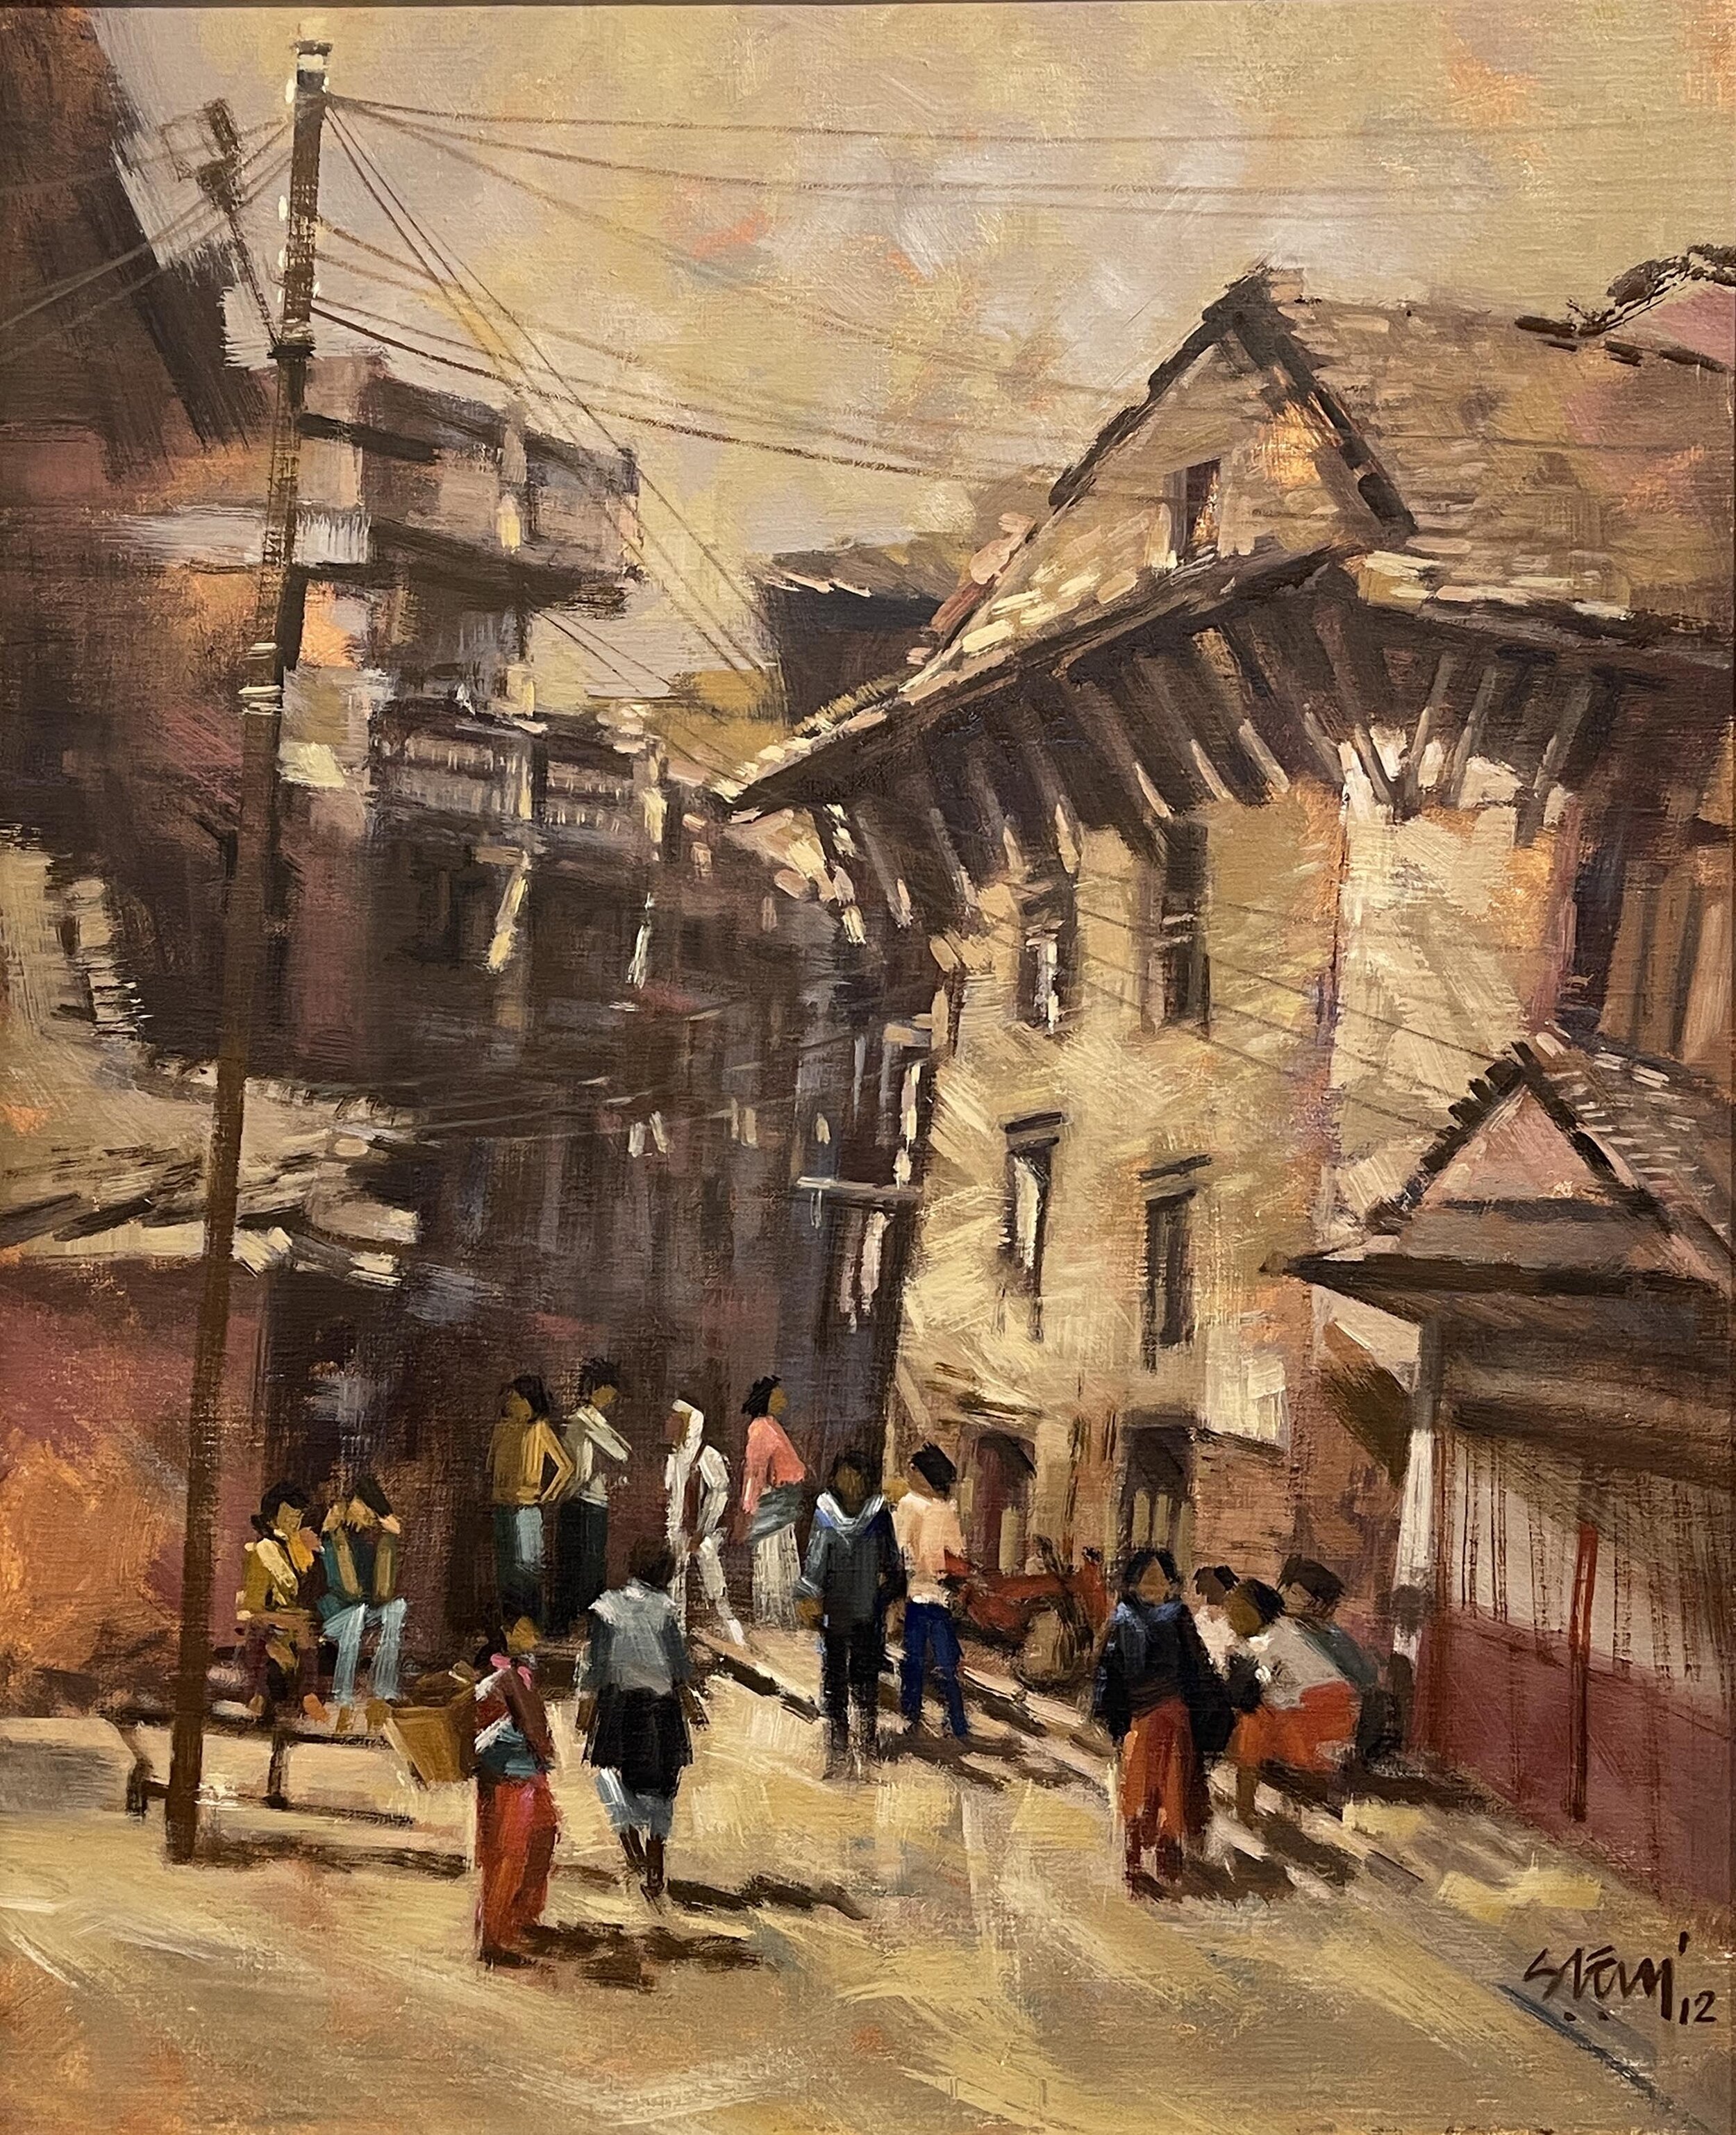 Nepal Village